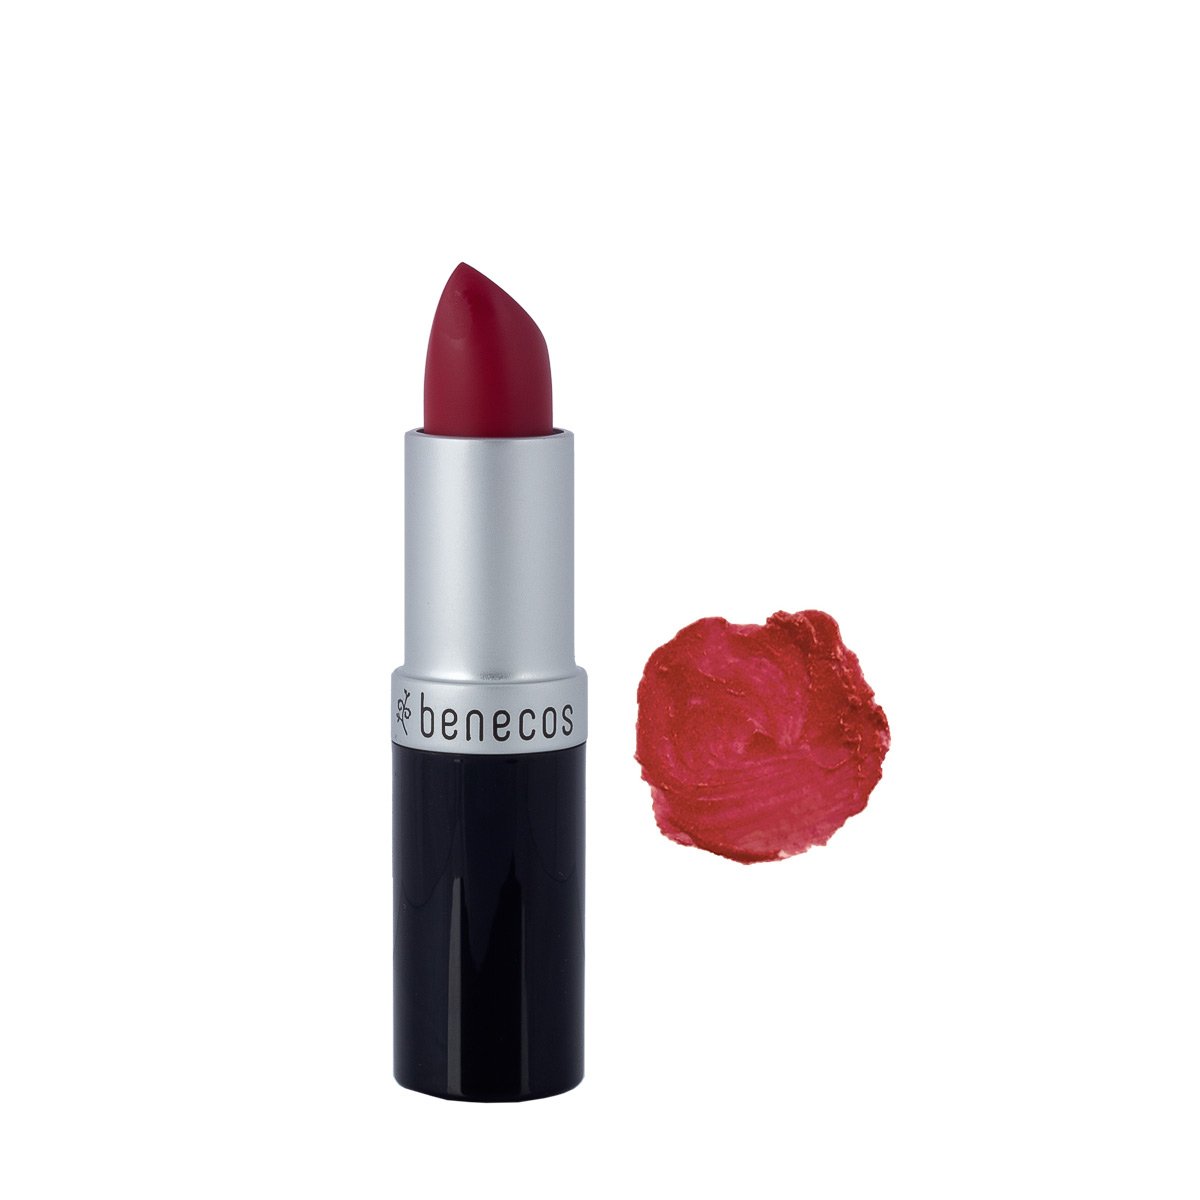 Benecos Natural Lip Stick - Just Red 4.5g